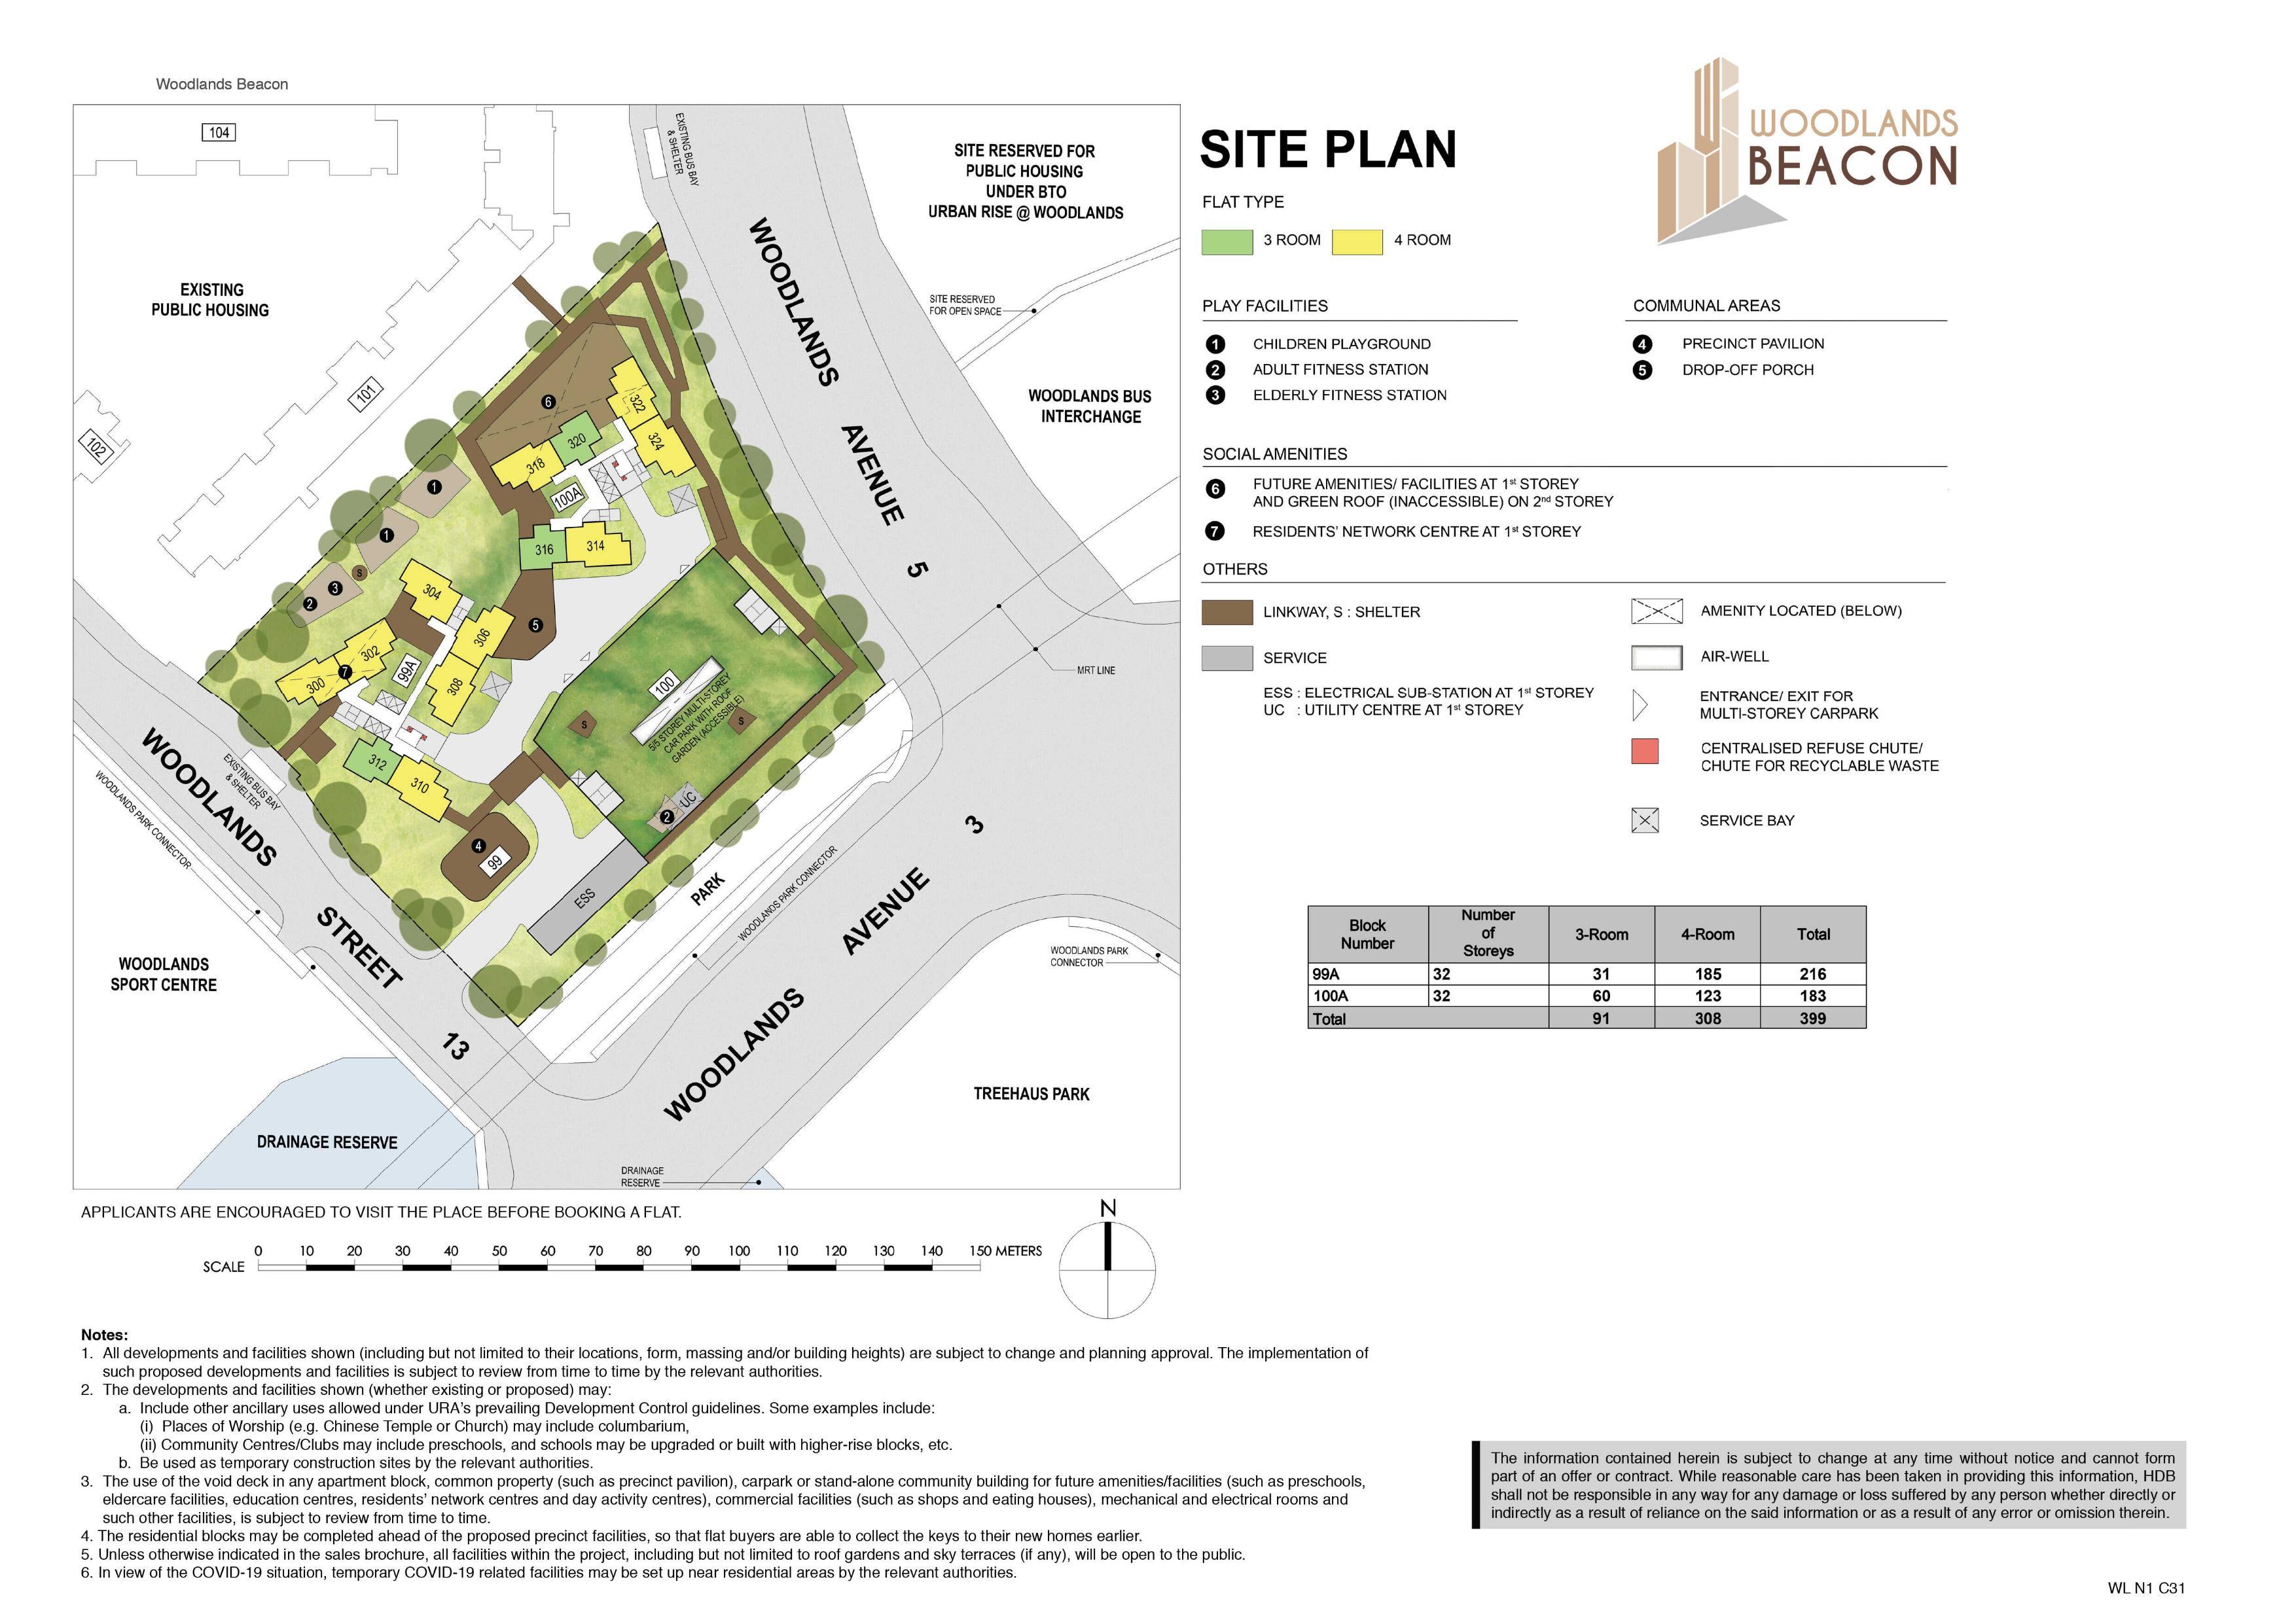 Woodlands Beacon site-plan